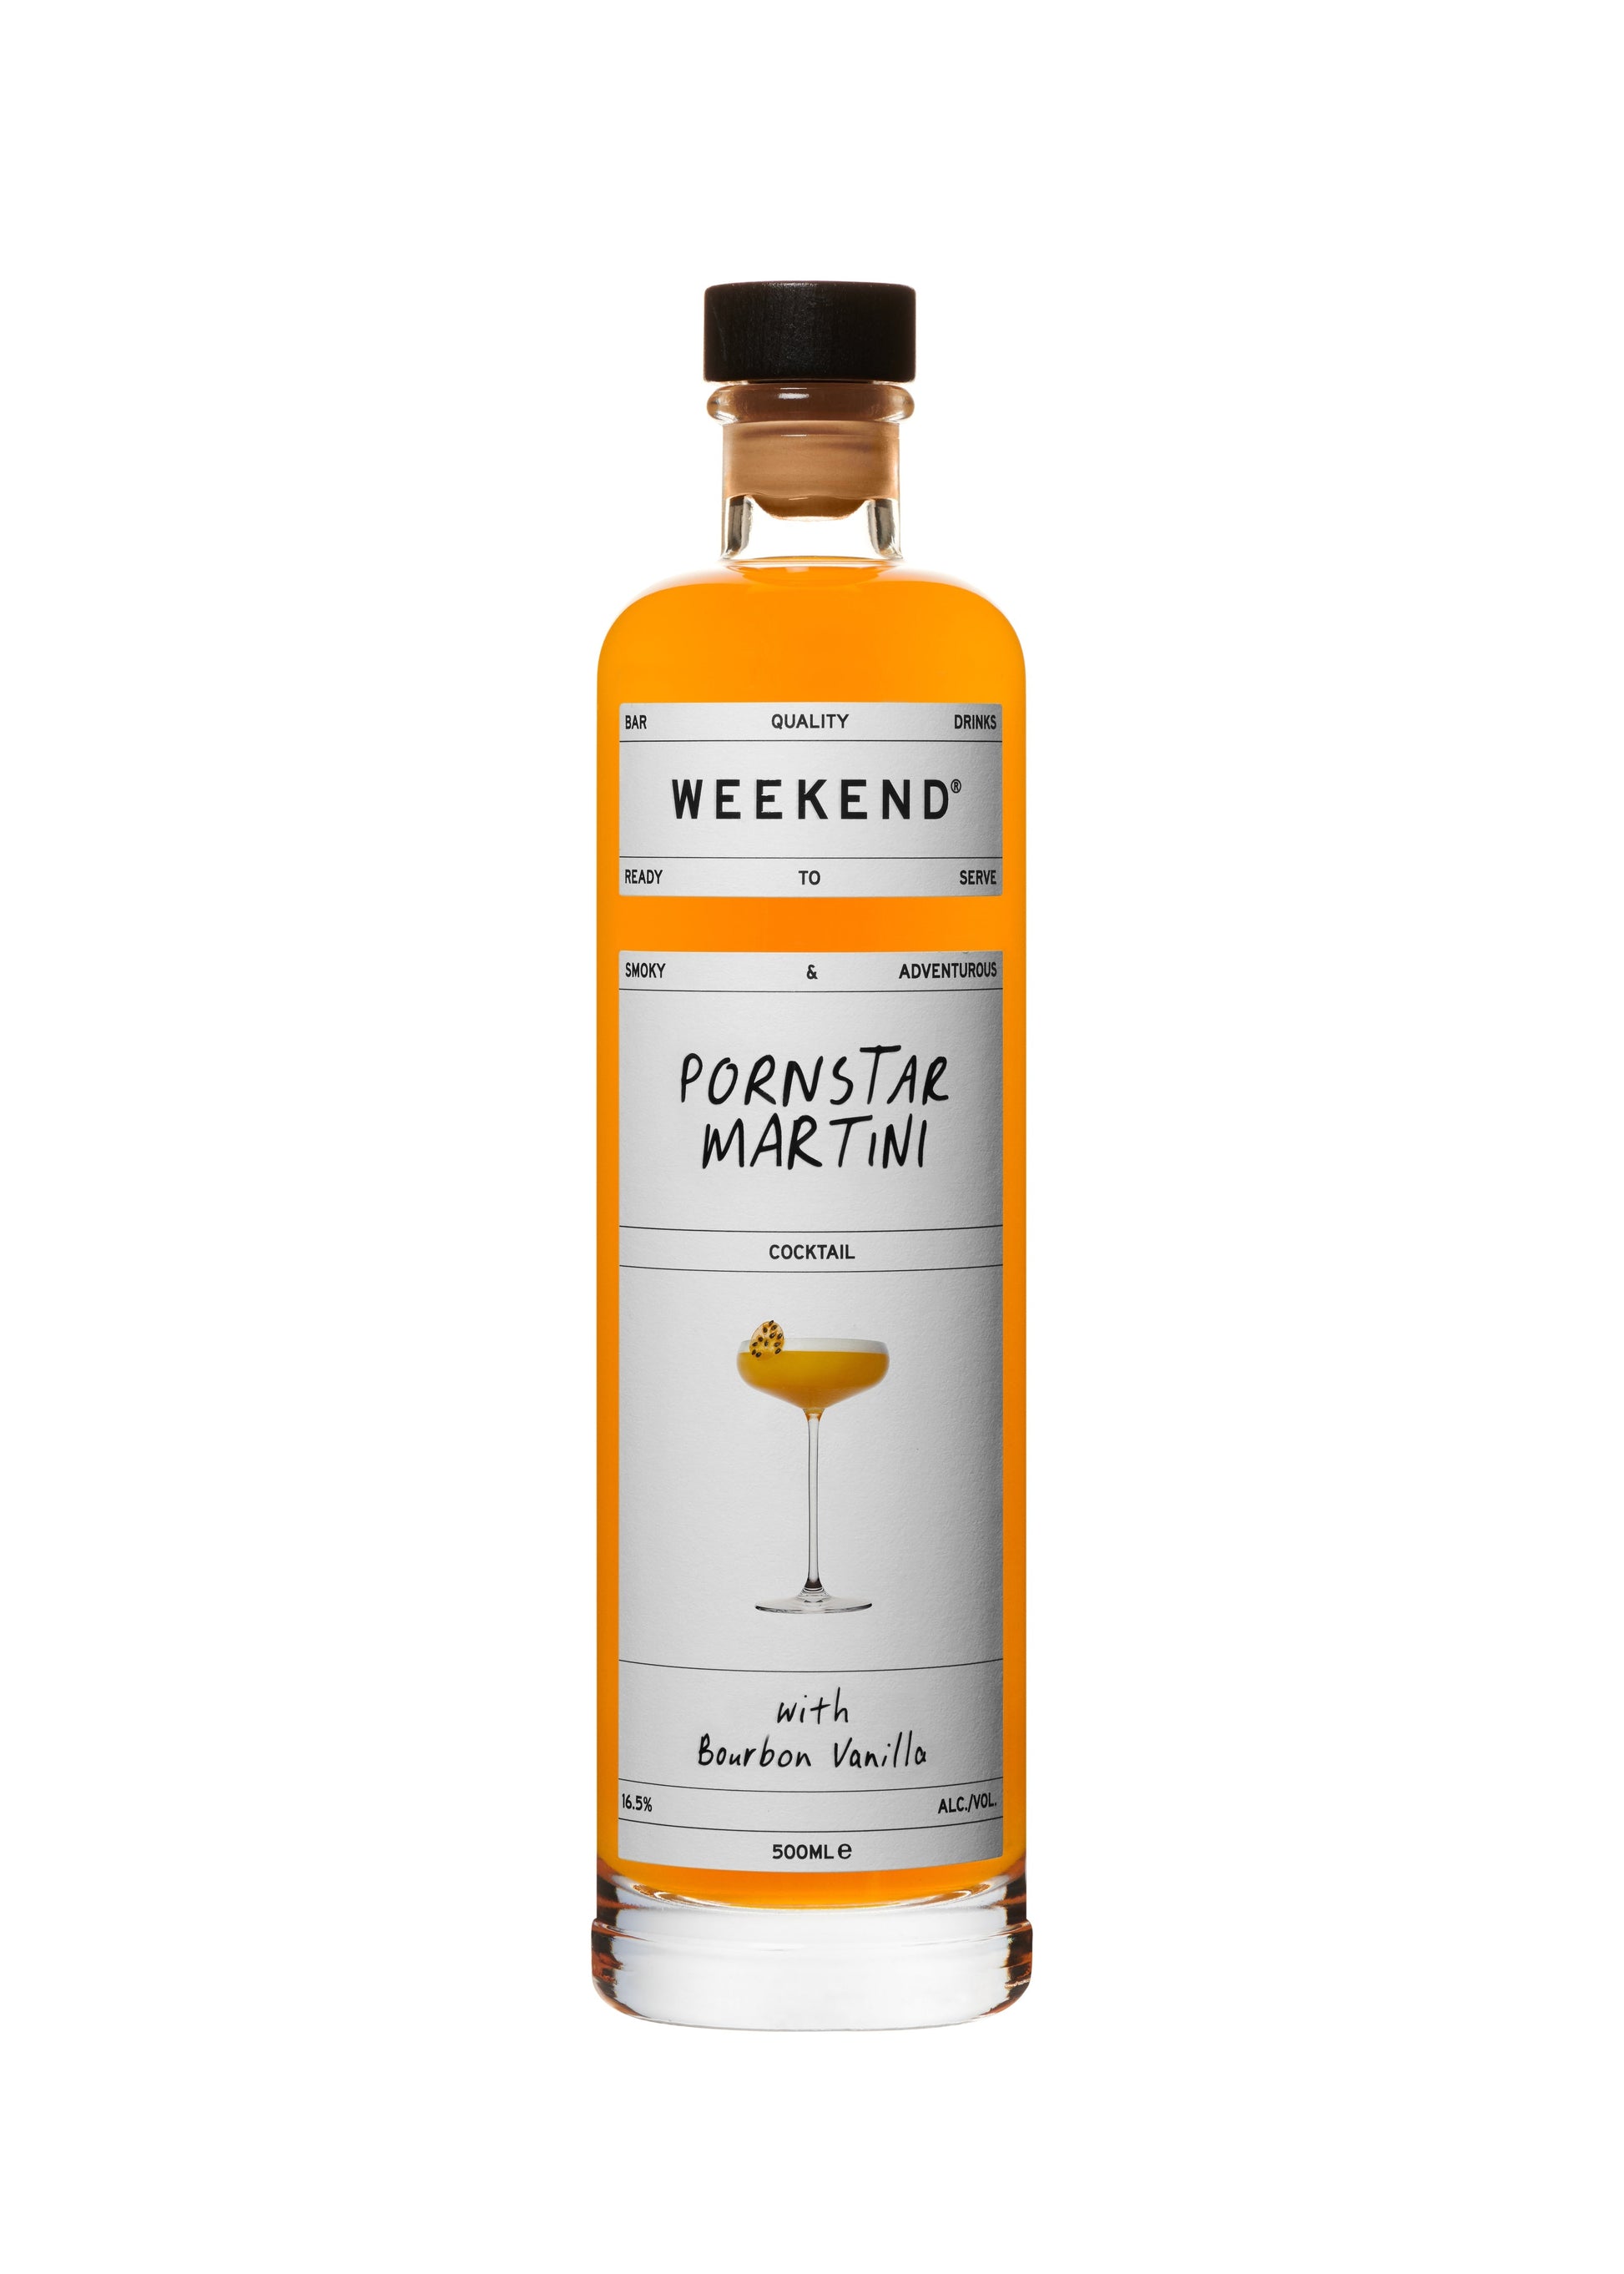 Pre-mixed pornstar martini cocktail in a bottle